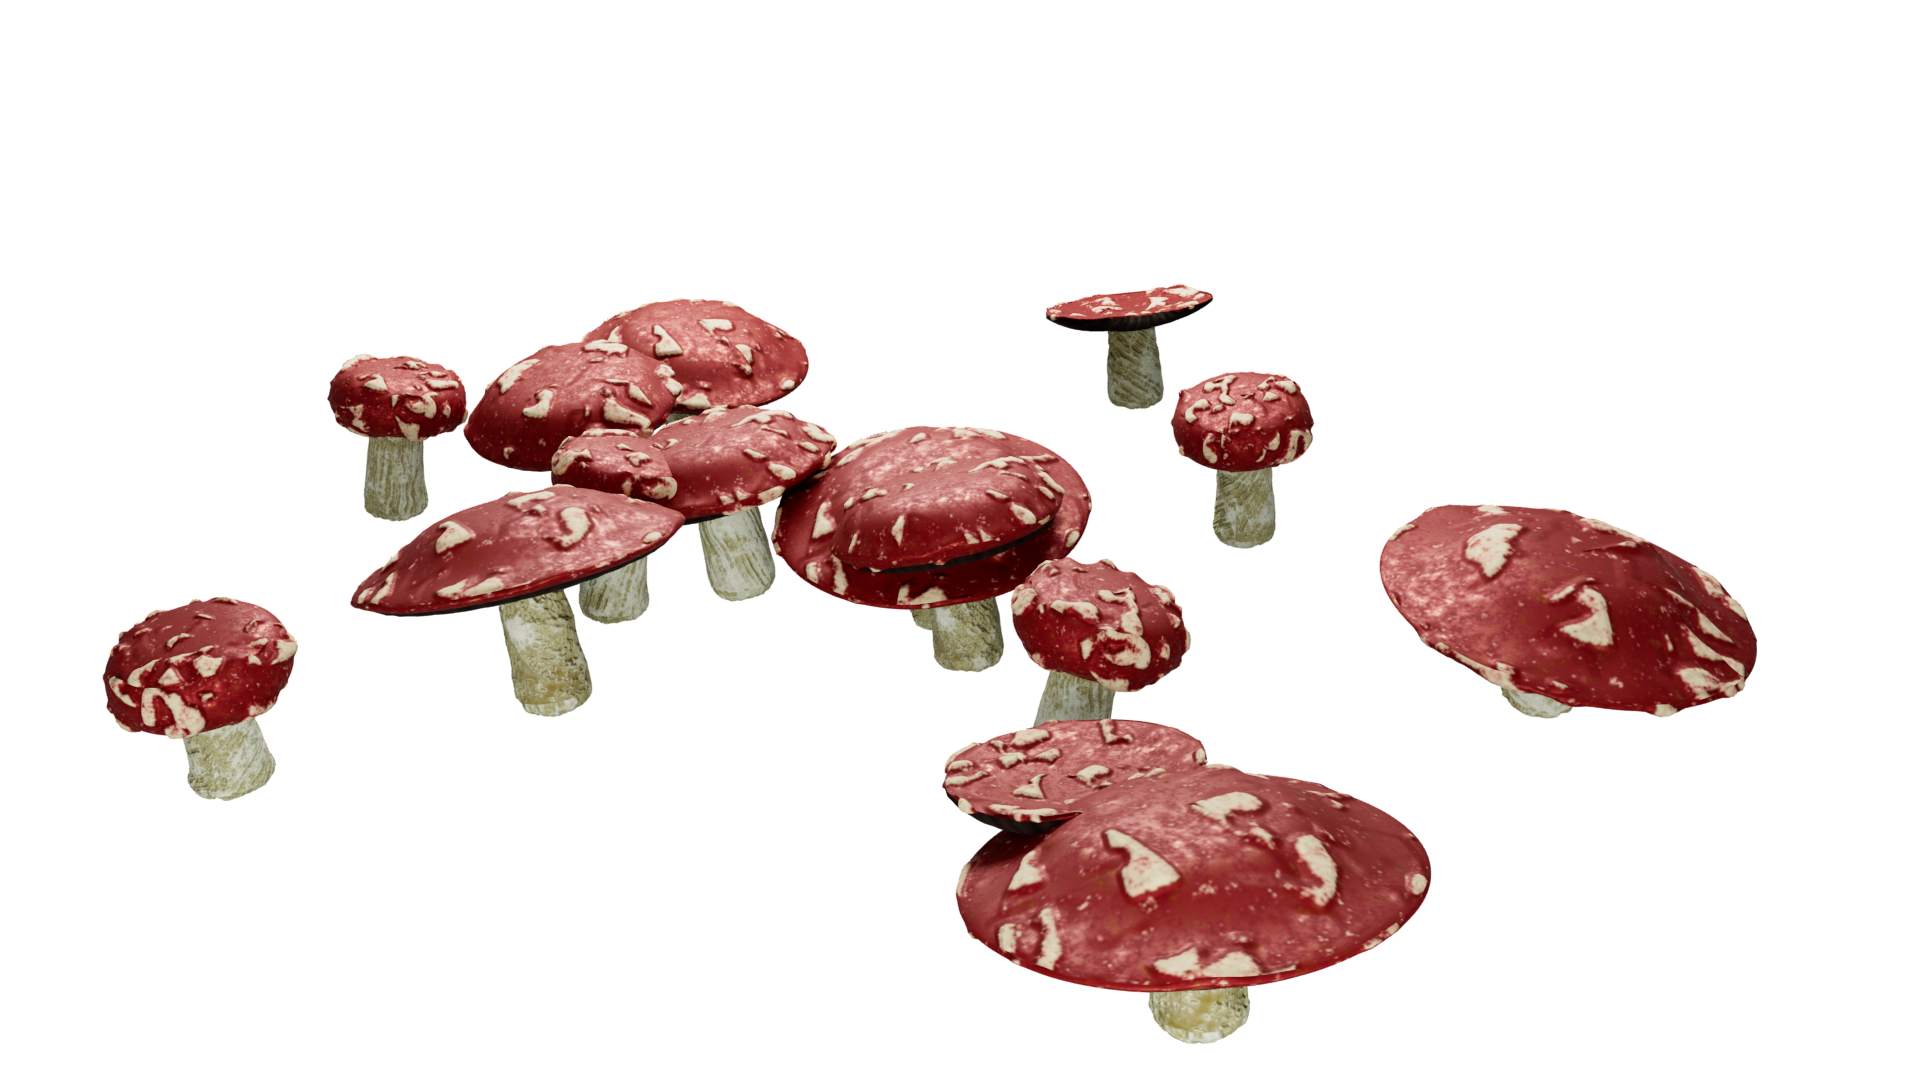 m/mushrooms image 1